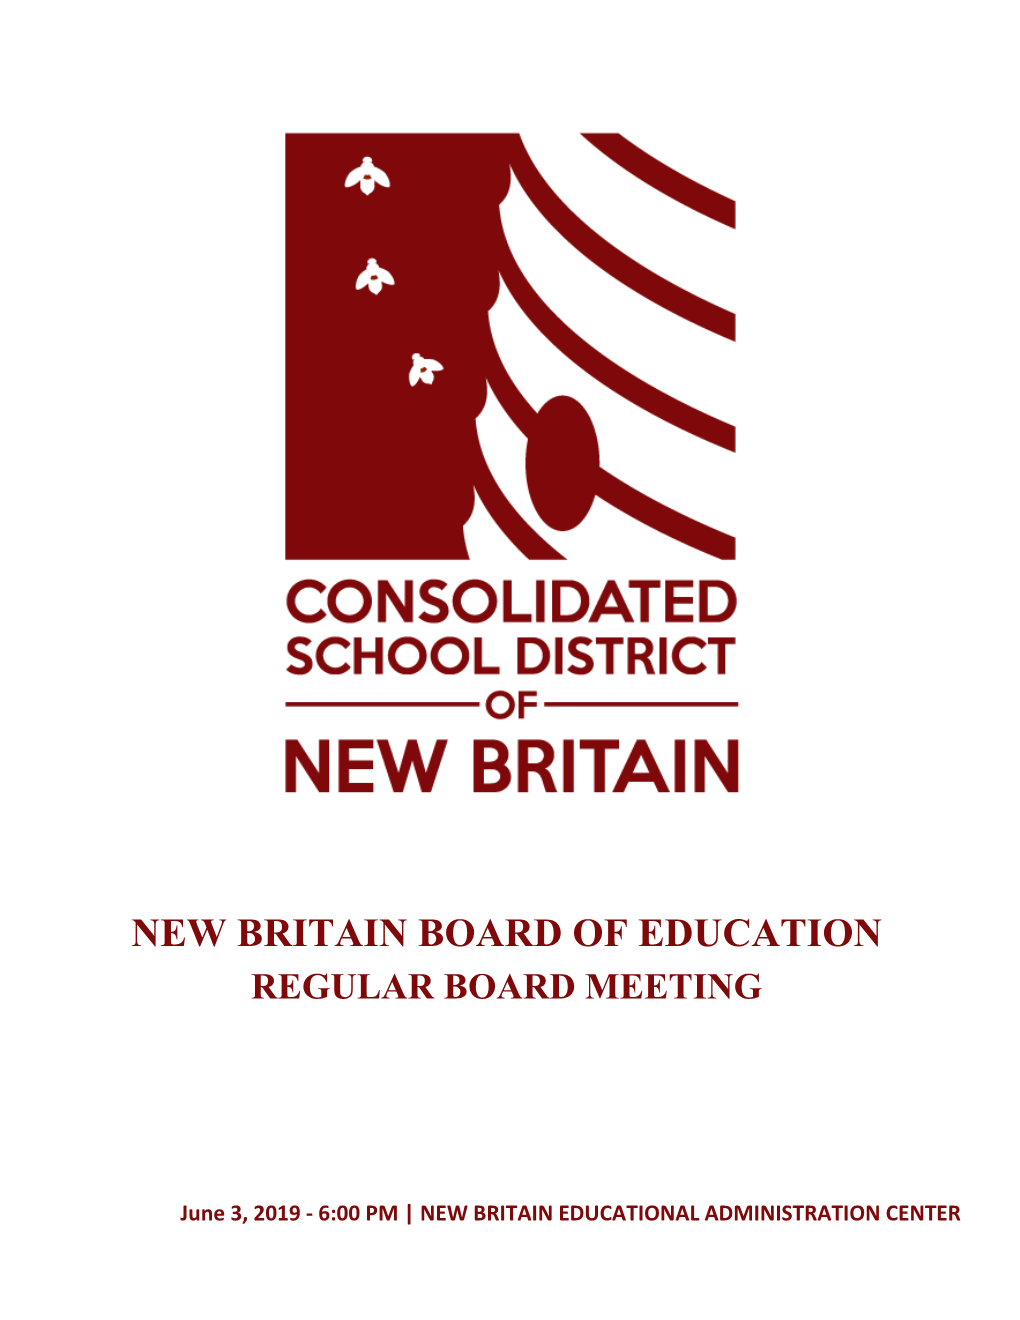 New Britain Board of Education